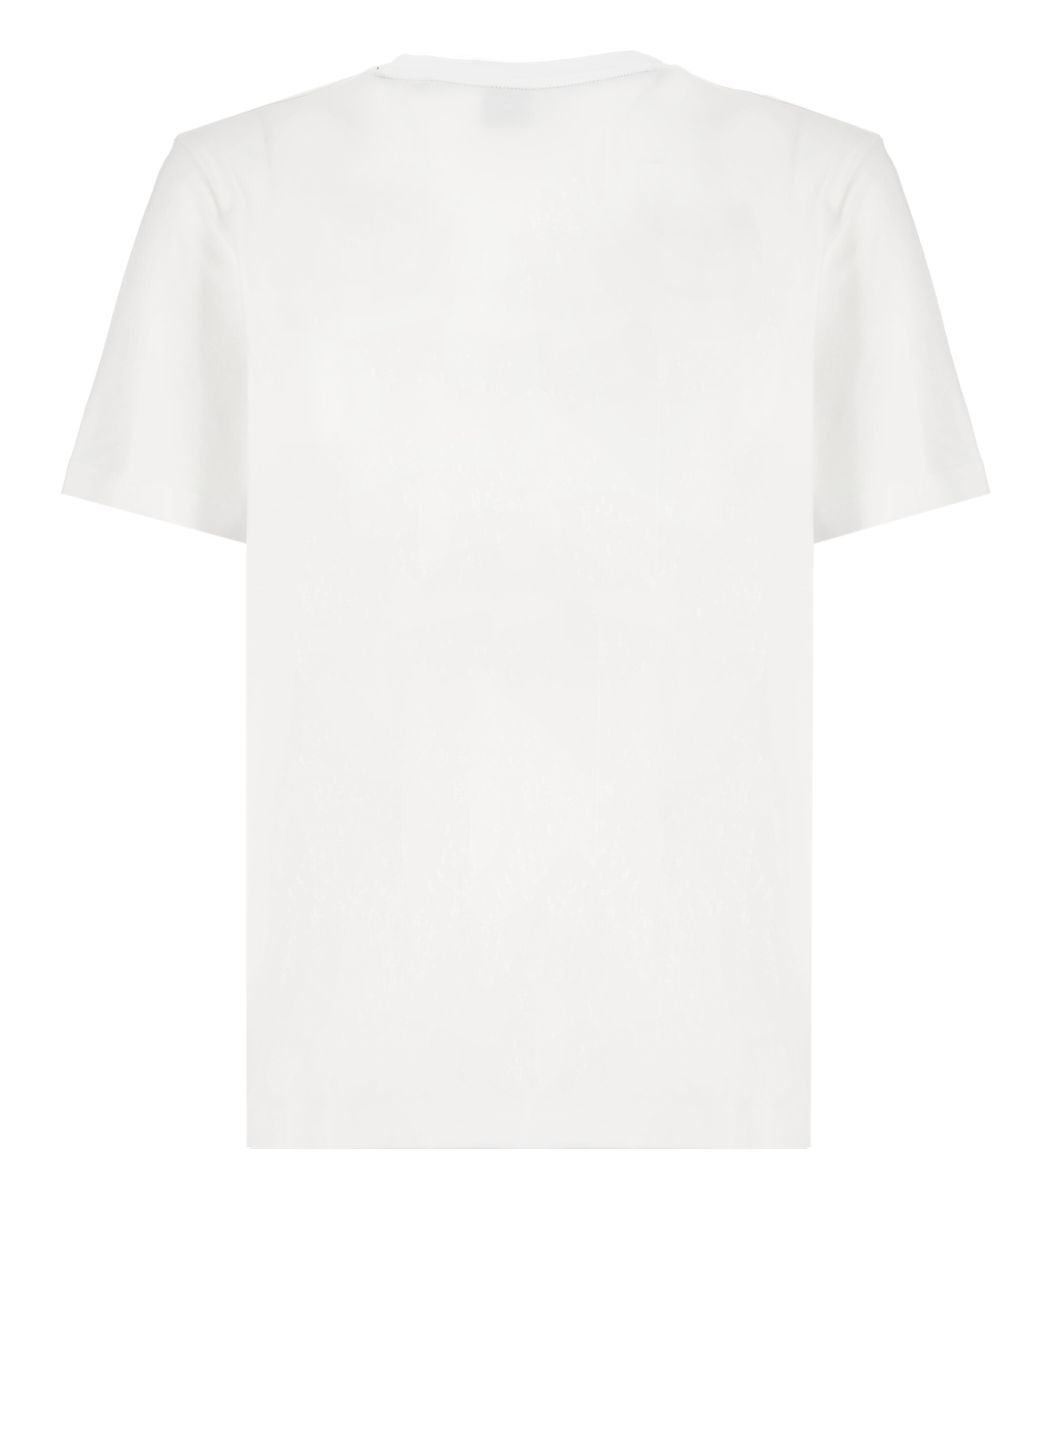 Tiburt 354 t-shirt